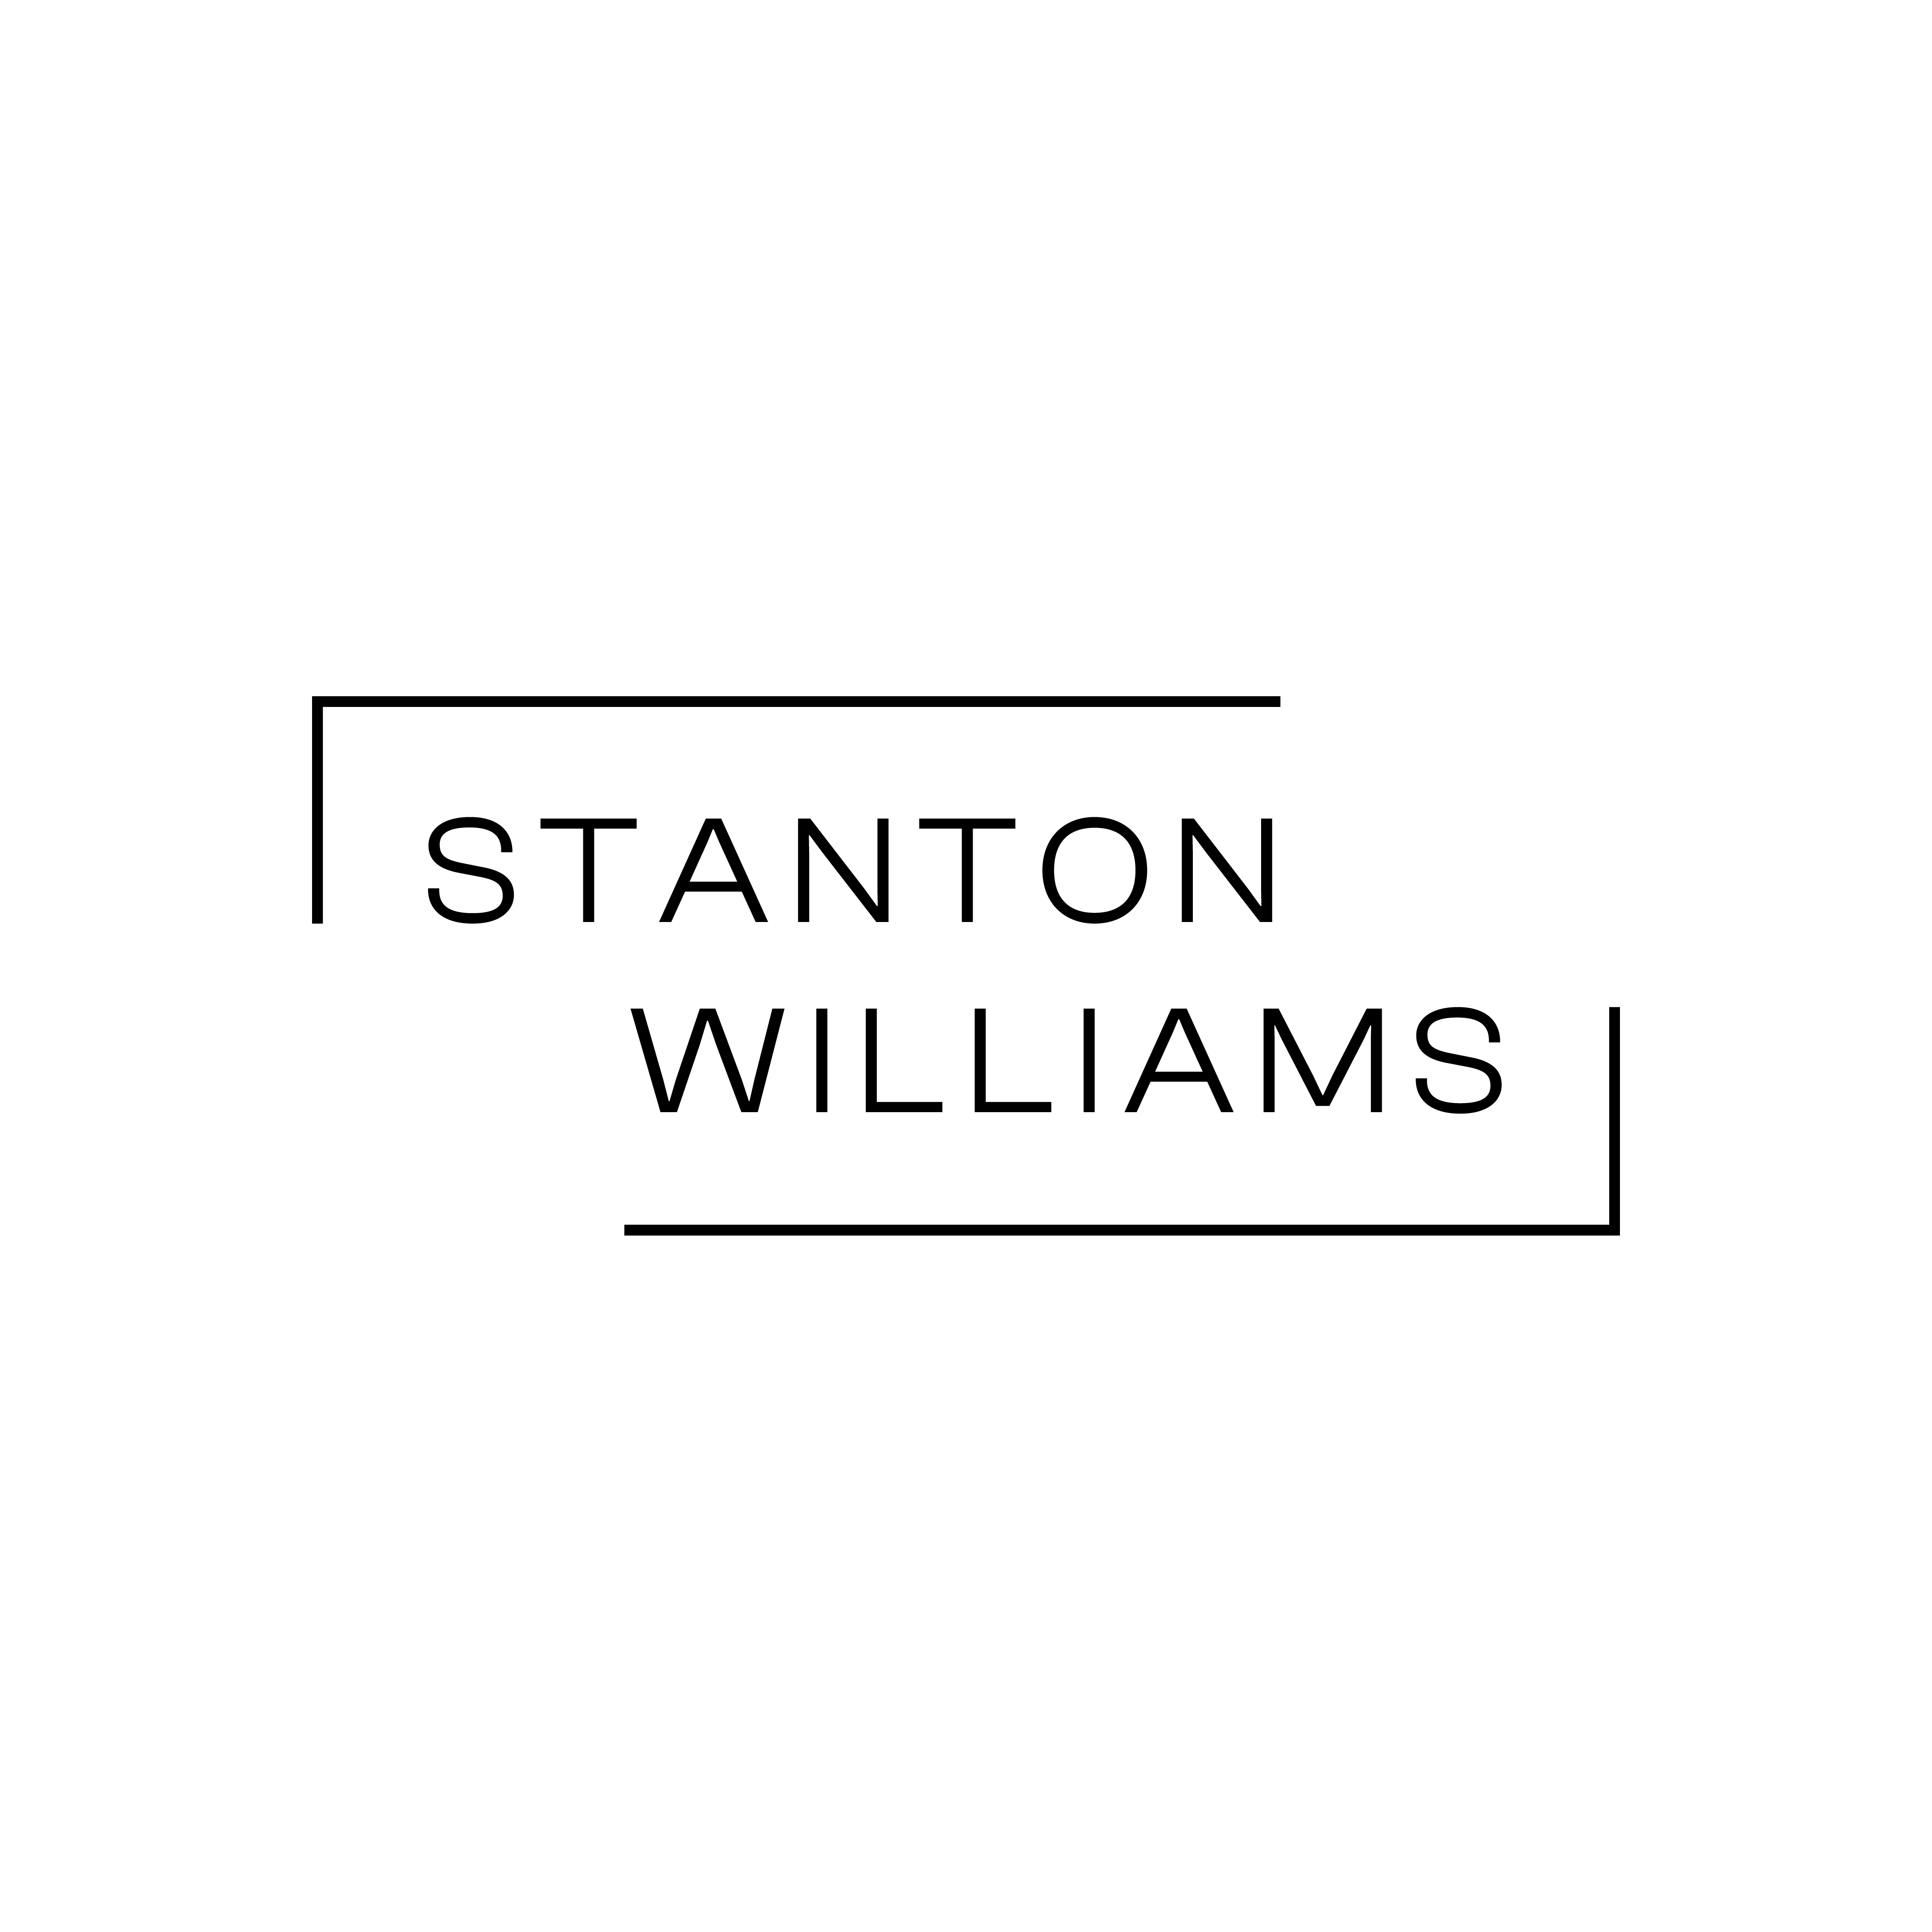 The logo of STANTONWILLIAMS